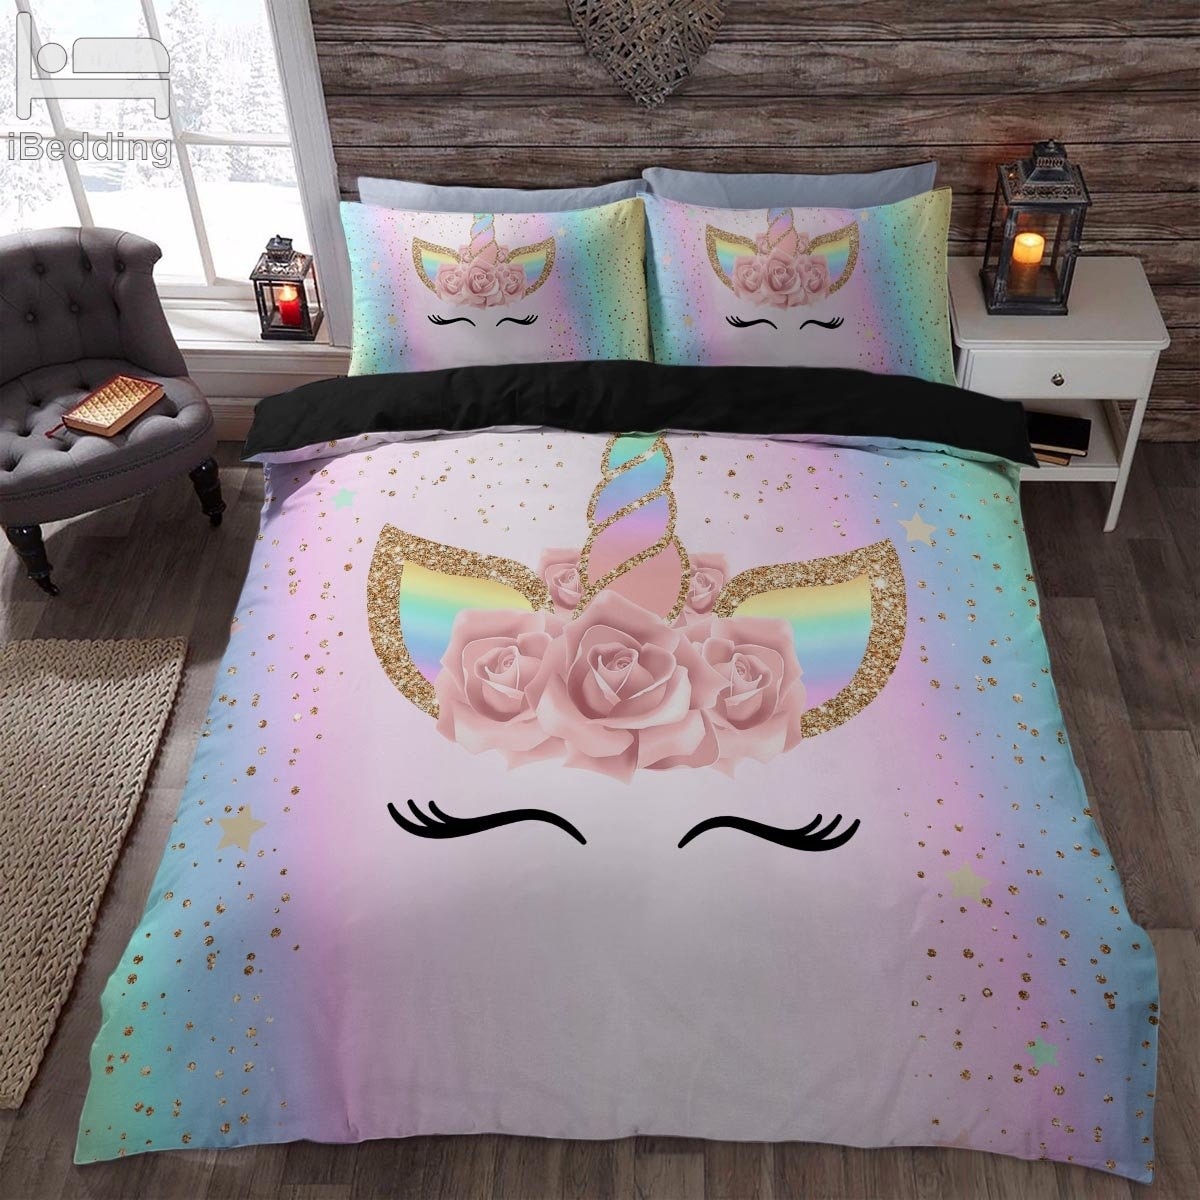 Unicorn Bedding Set Adorable Bed Linen